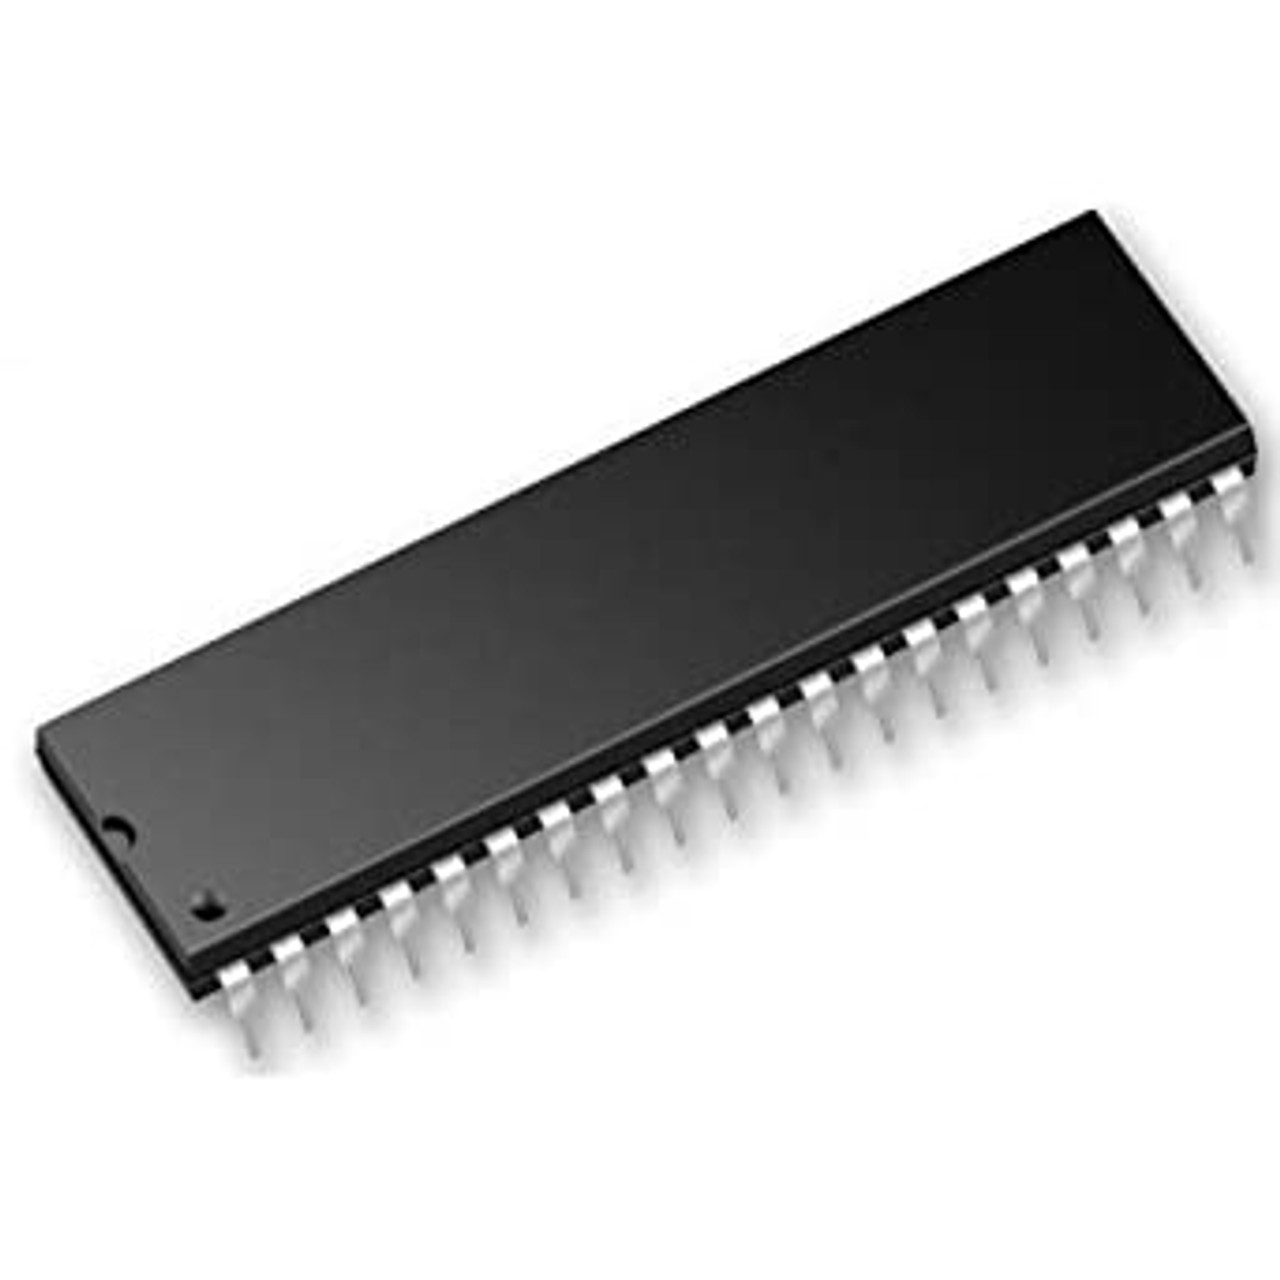 AT90S8535-8PC ; 8-bit Microcontroller 8K Bytes Flash Memory, DIP-40-W